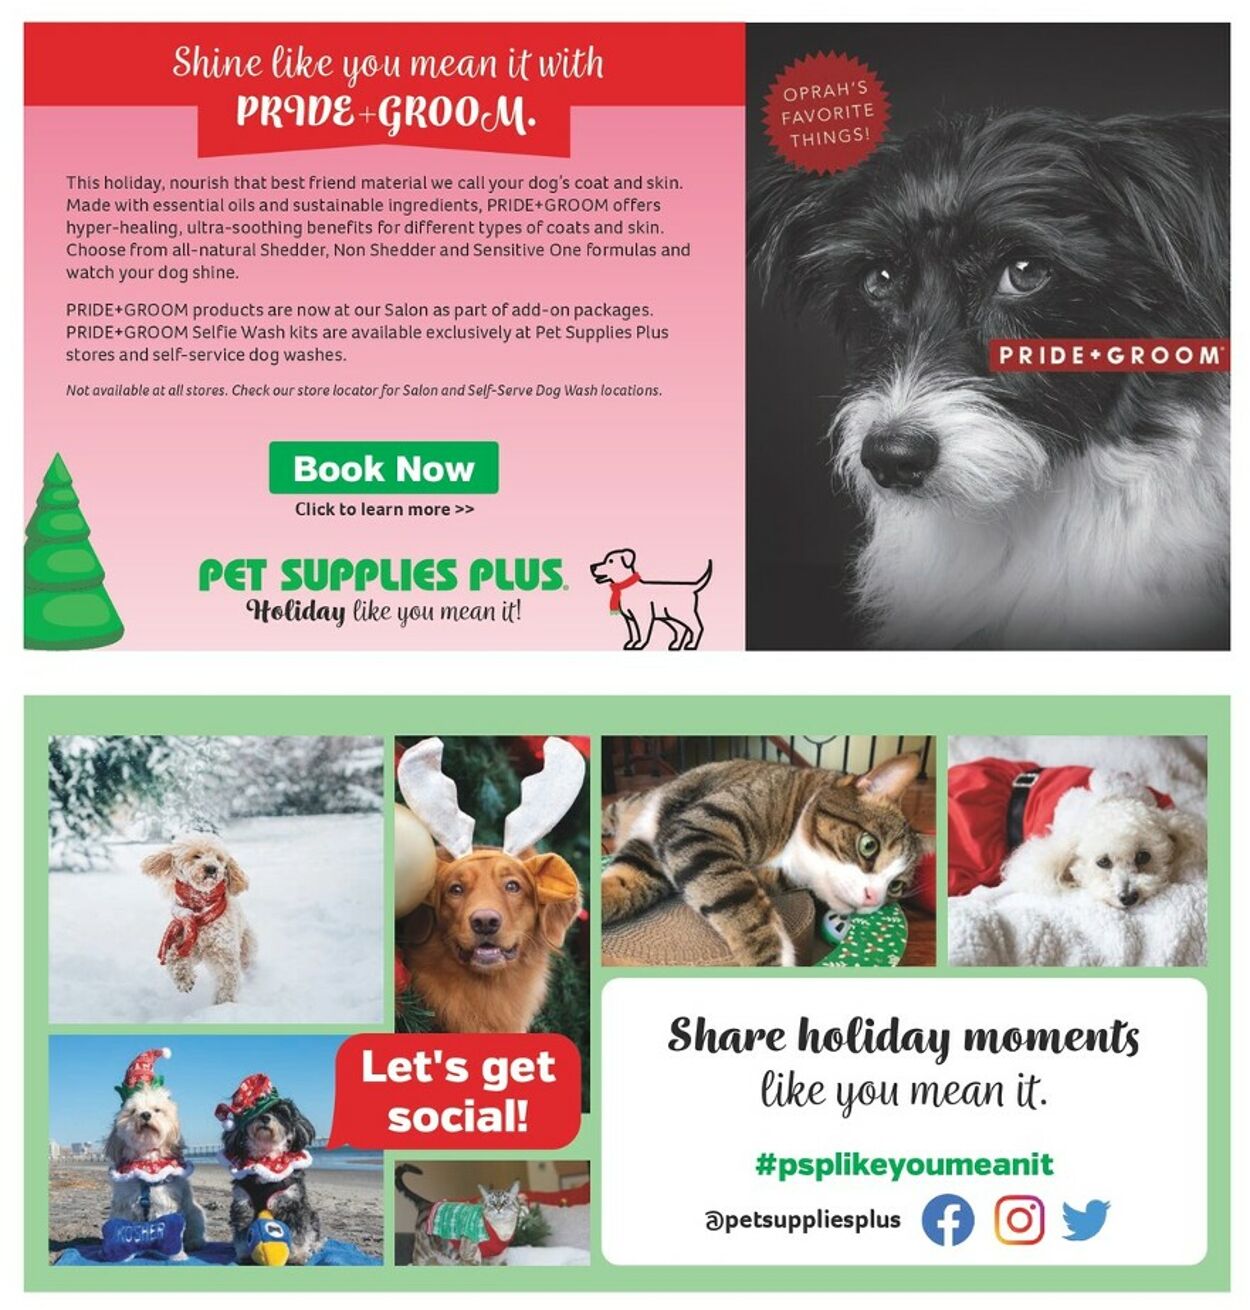 Weekly ad Pet Supplies Plus 12/10/2022 - 12/11/2022